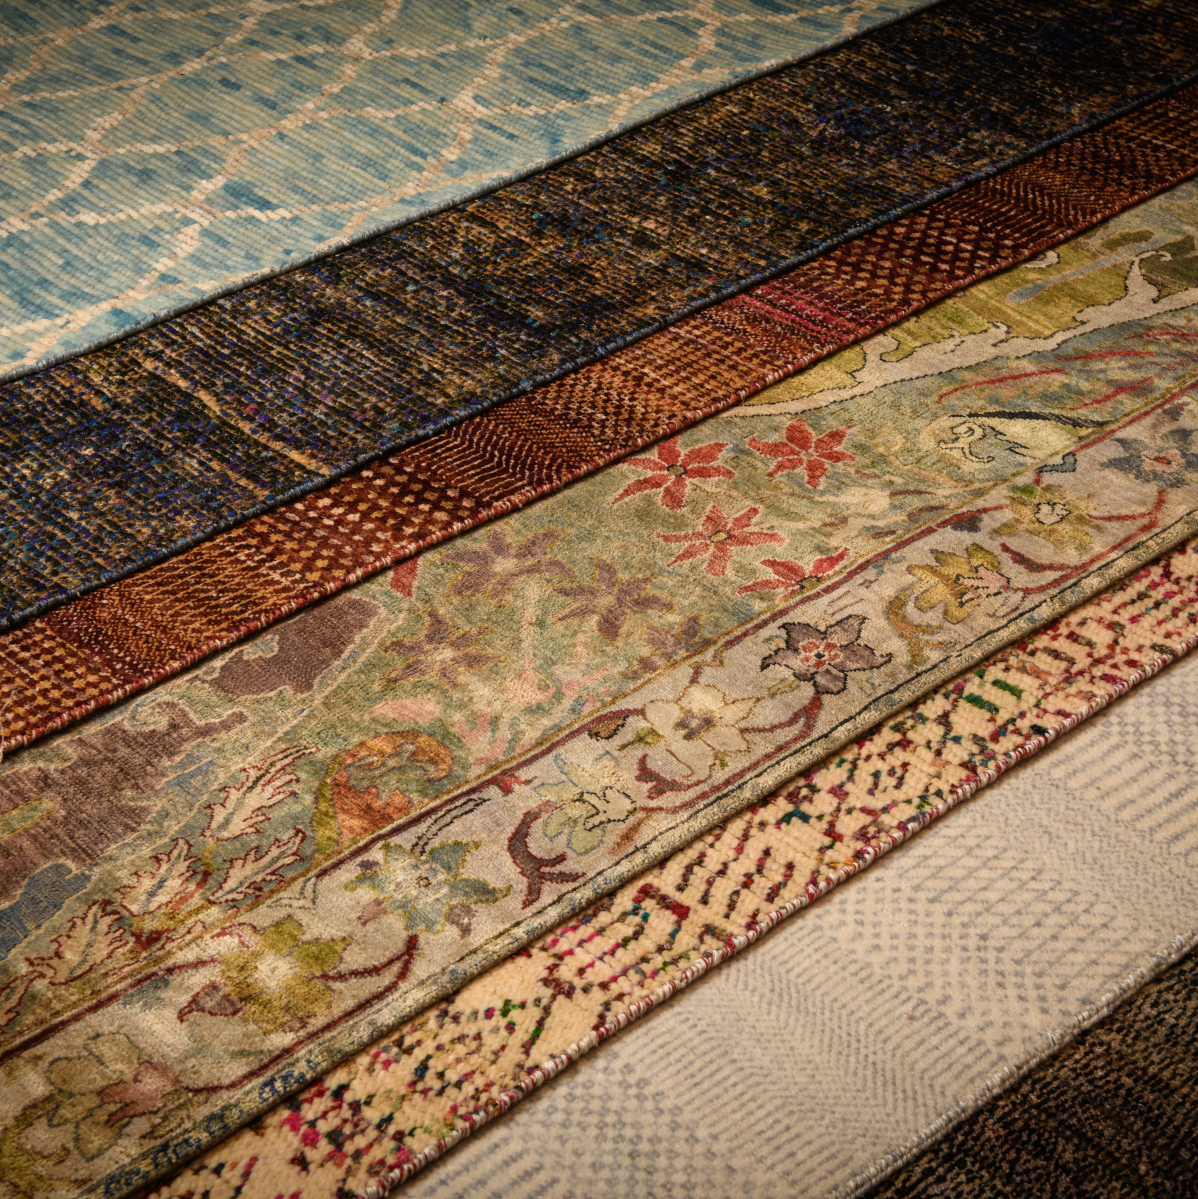 Lapicida Showroom features luxury rugs